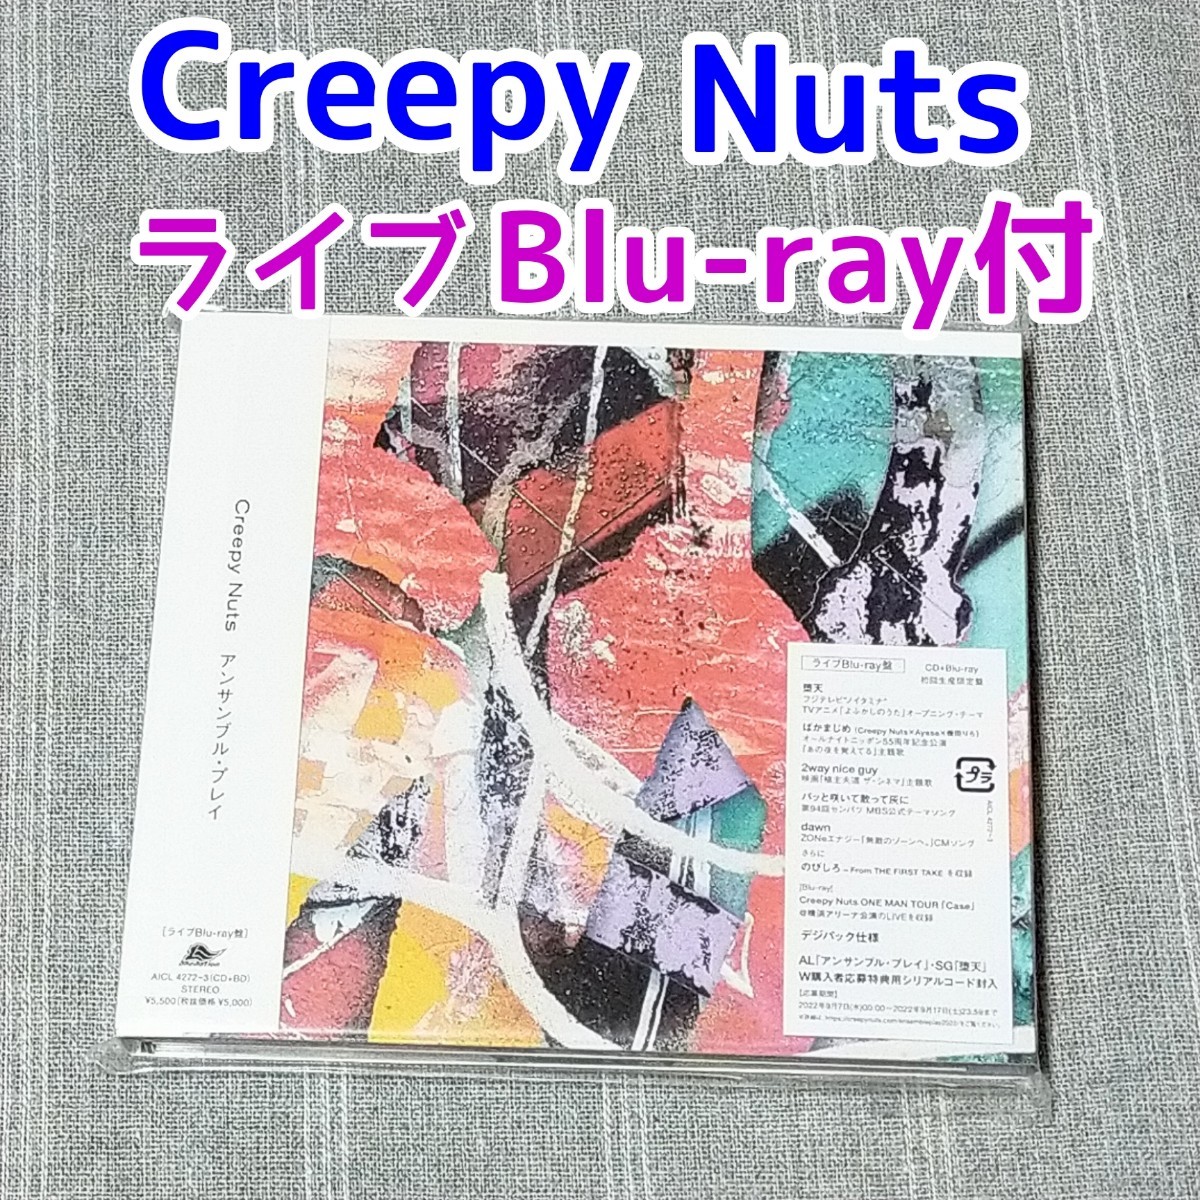 Creepy Nuts アンサンブル・プレイ ライブBlu-ray盤 ブルーレイ よ